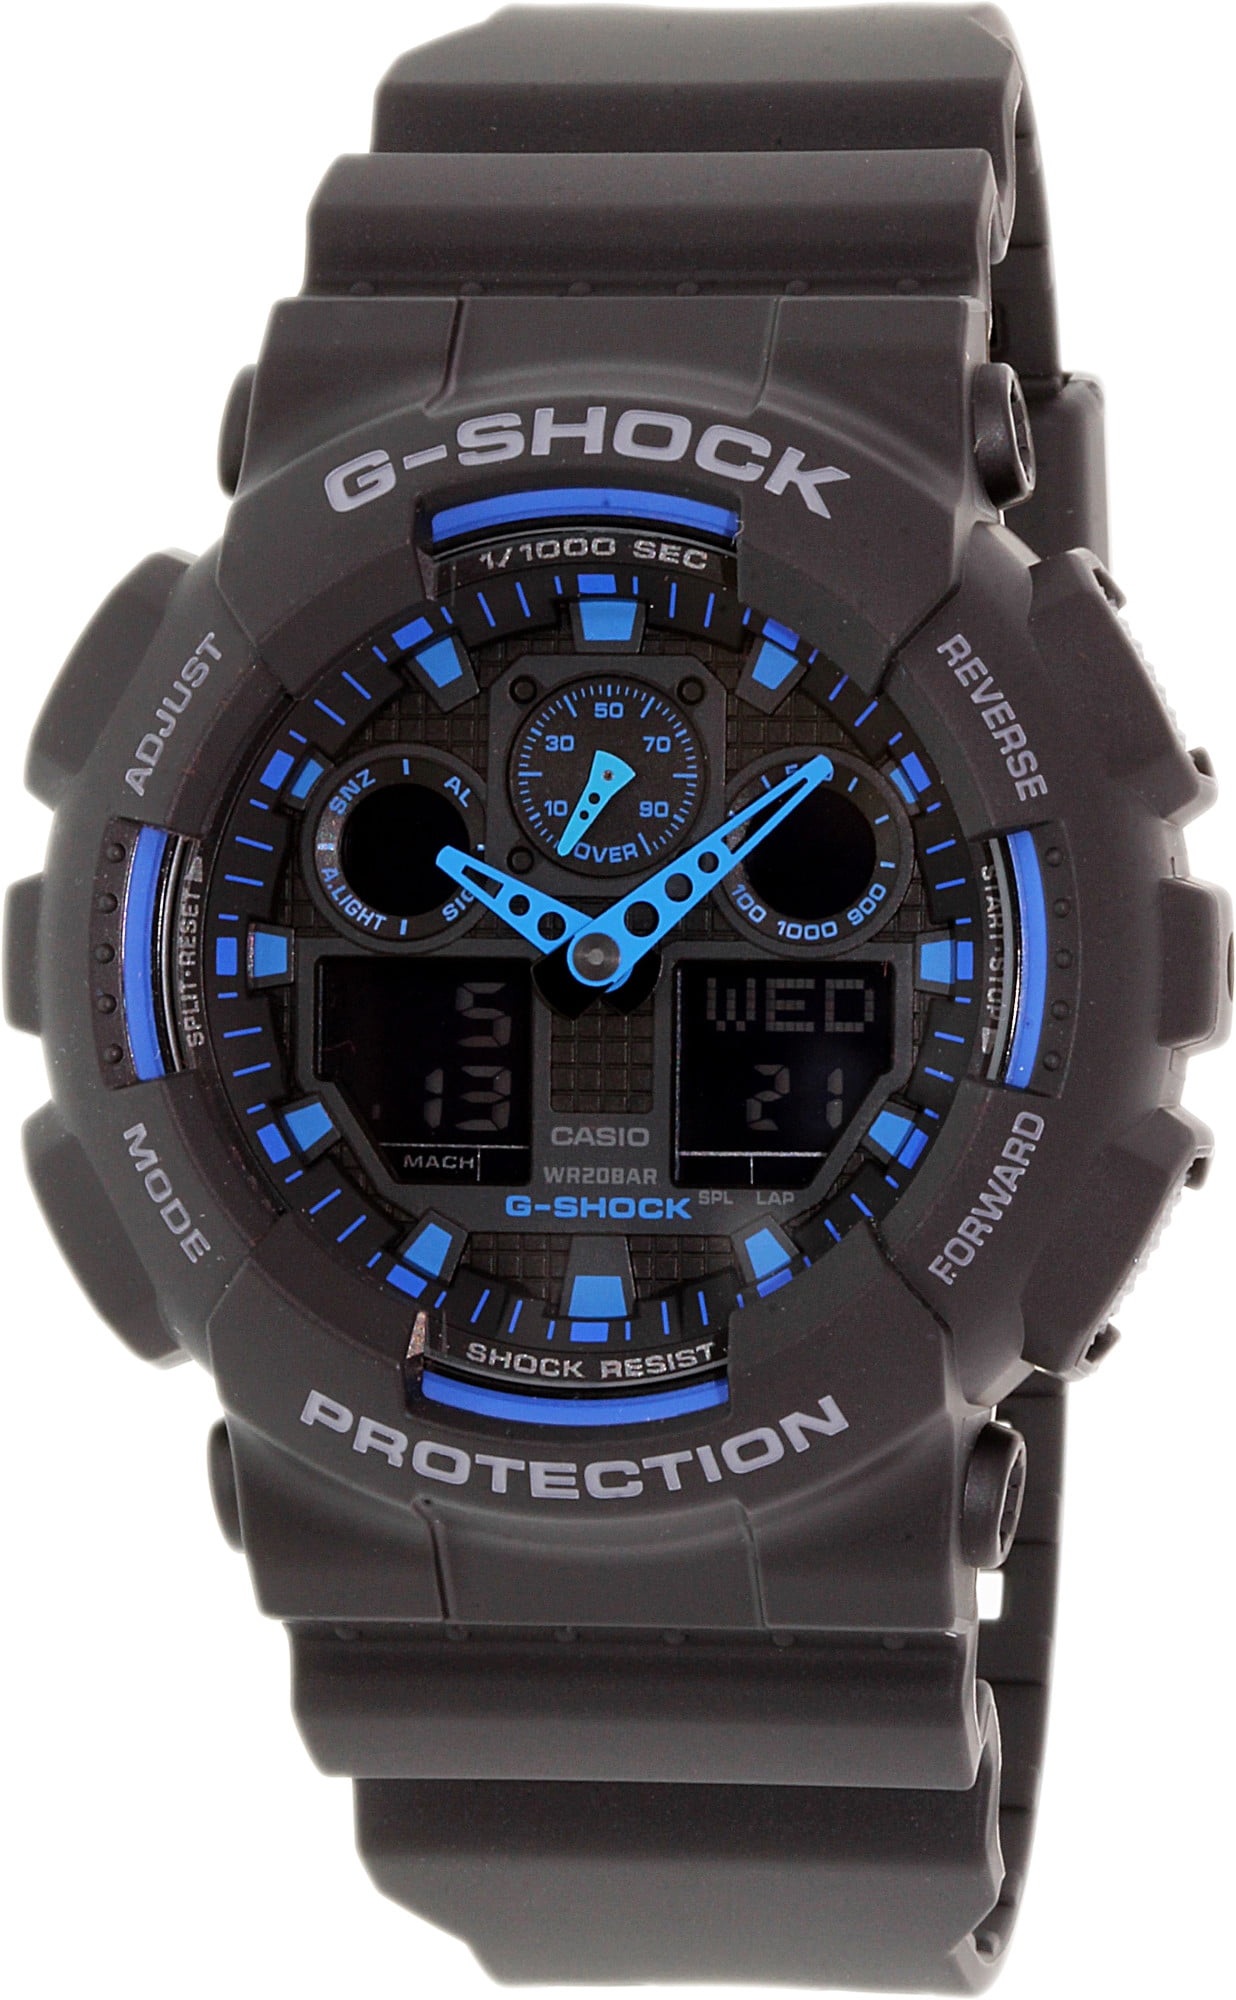 Casio Men's G-Shock GA100-1A2 Black Resin Quartz Fashion Watch ...